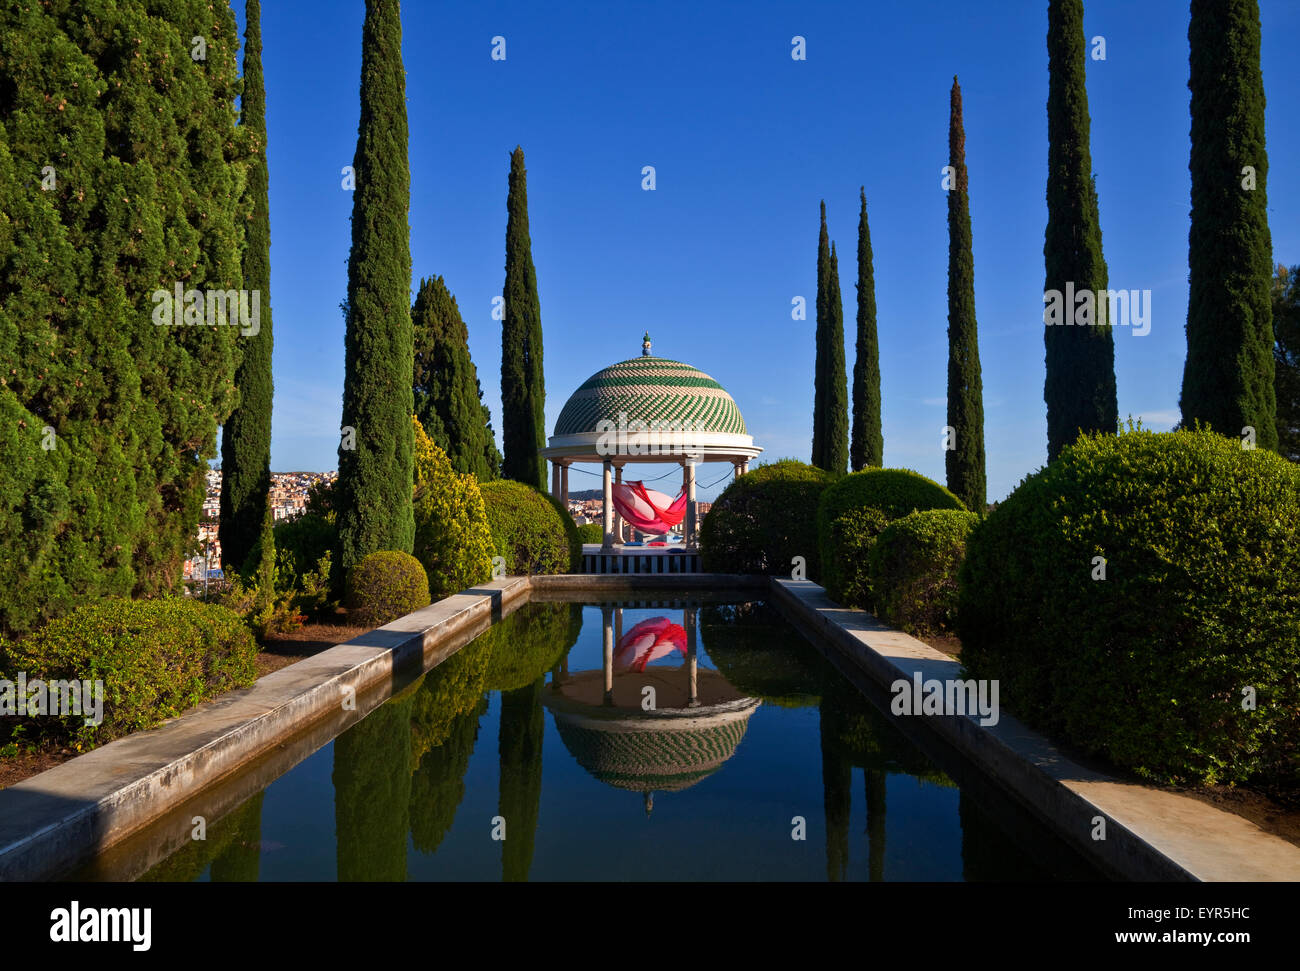 Pool and temple with art installation, Botanical Garden or Jardin Botanico de La Concepcion, Malaga, Andalucia, Spain. Stock Photo